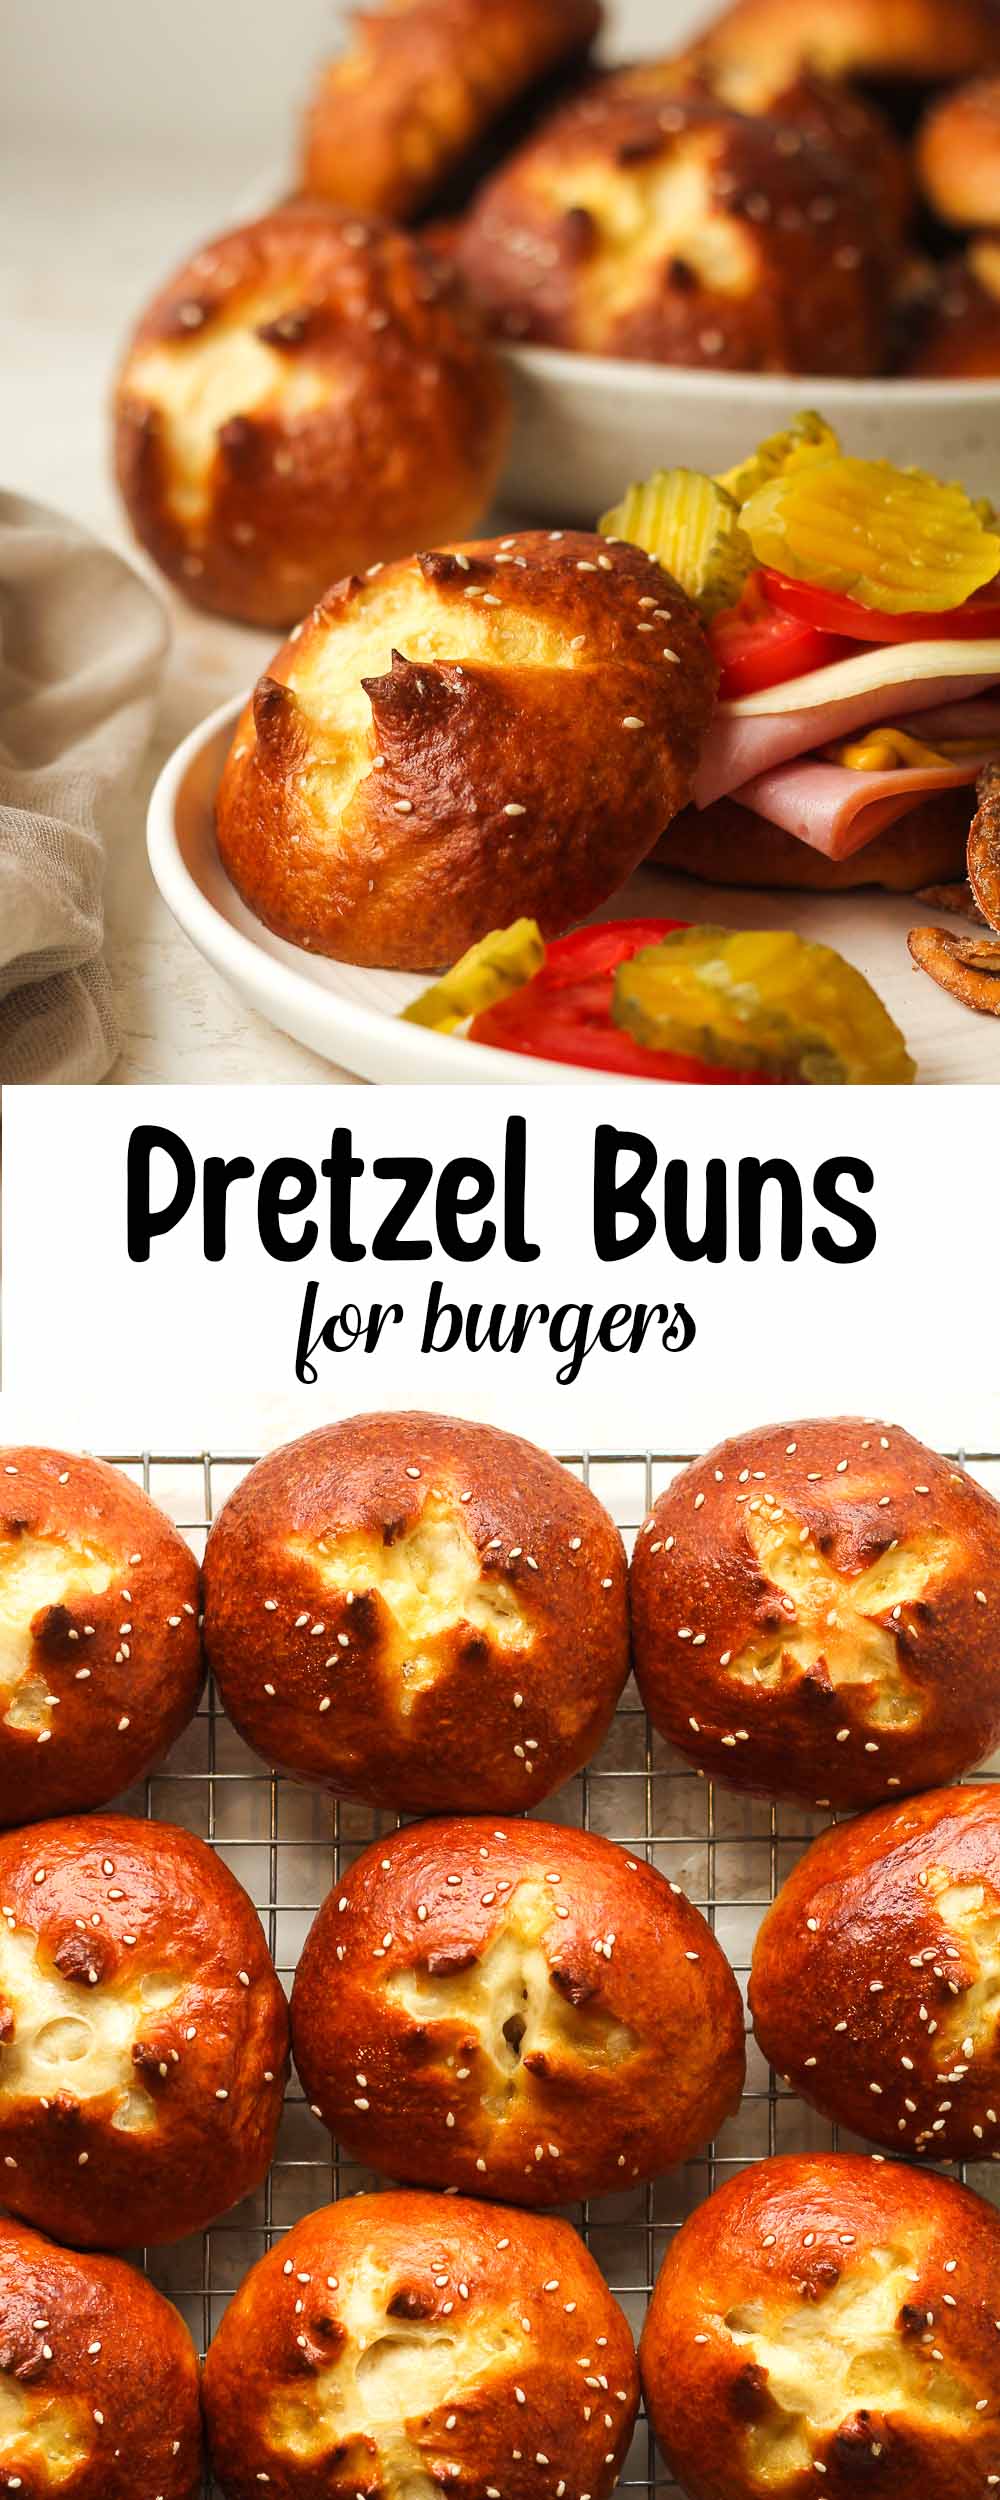 A collage of pretzel buns for burgers.